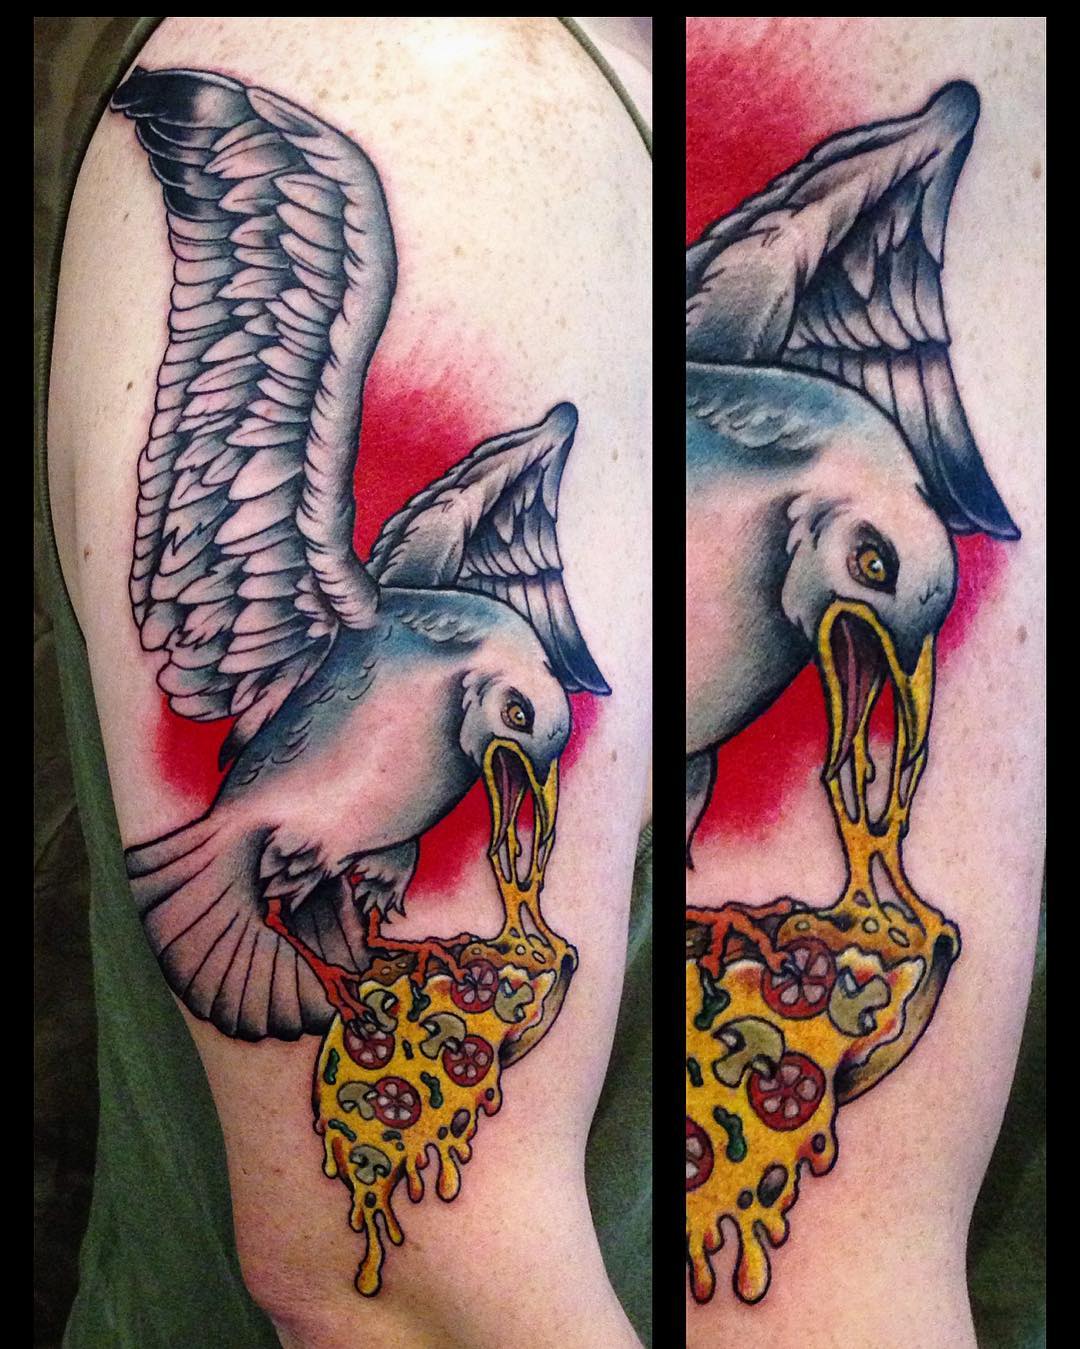 Fun one shot of this pizza-stealing seagull 
#tattoo#tattooing#tatovering#tatovø...